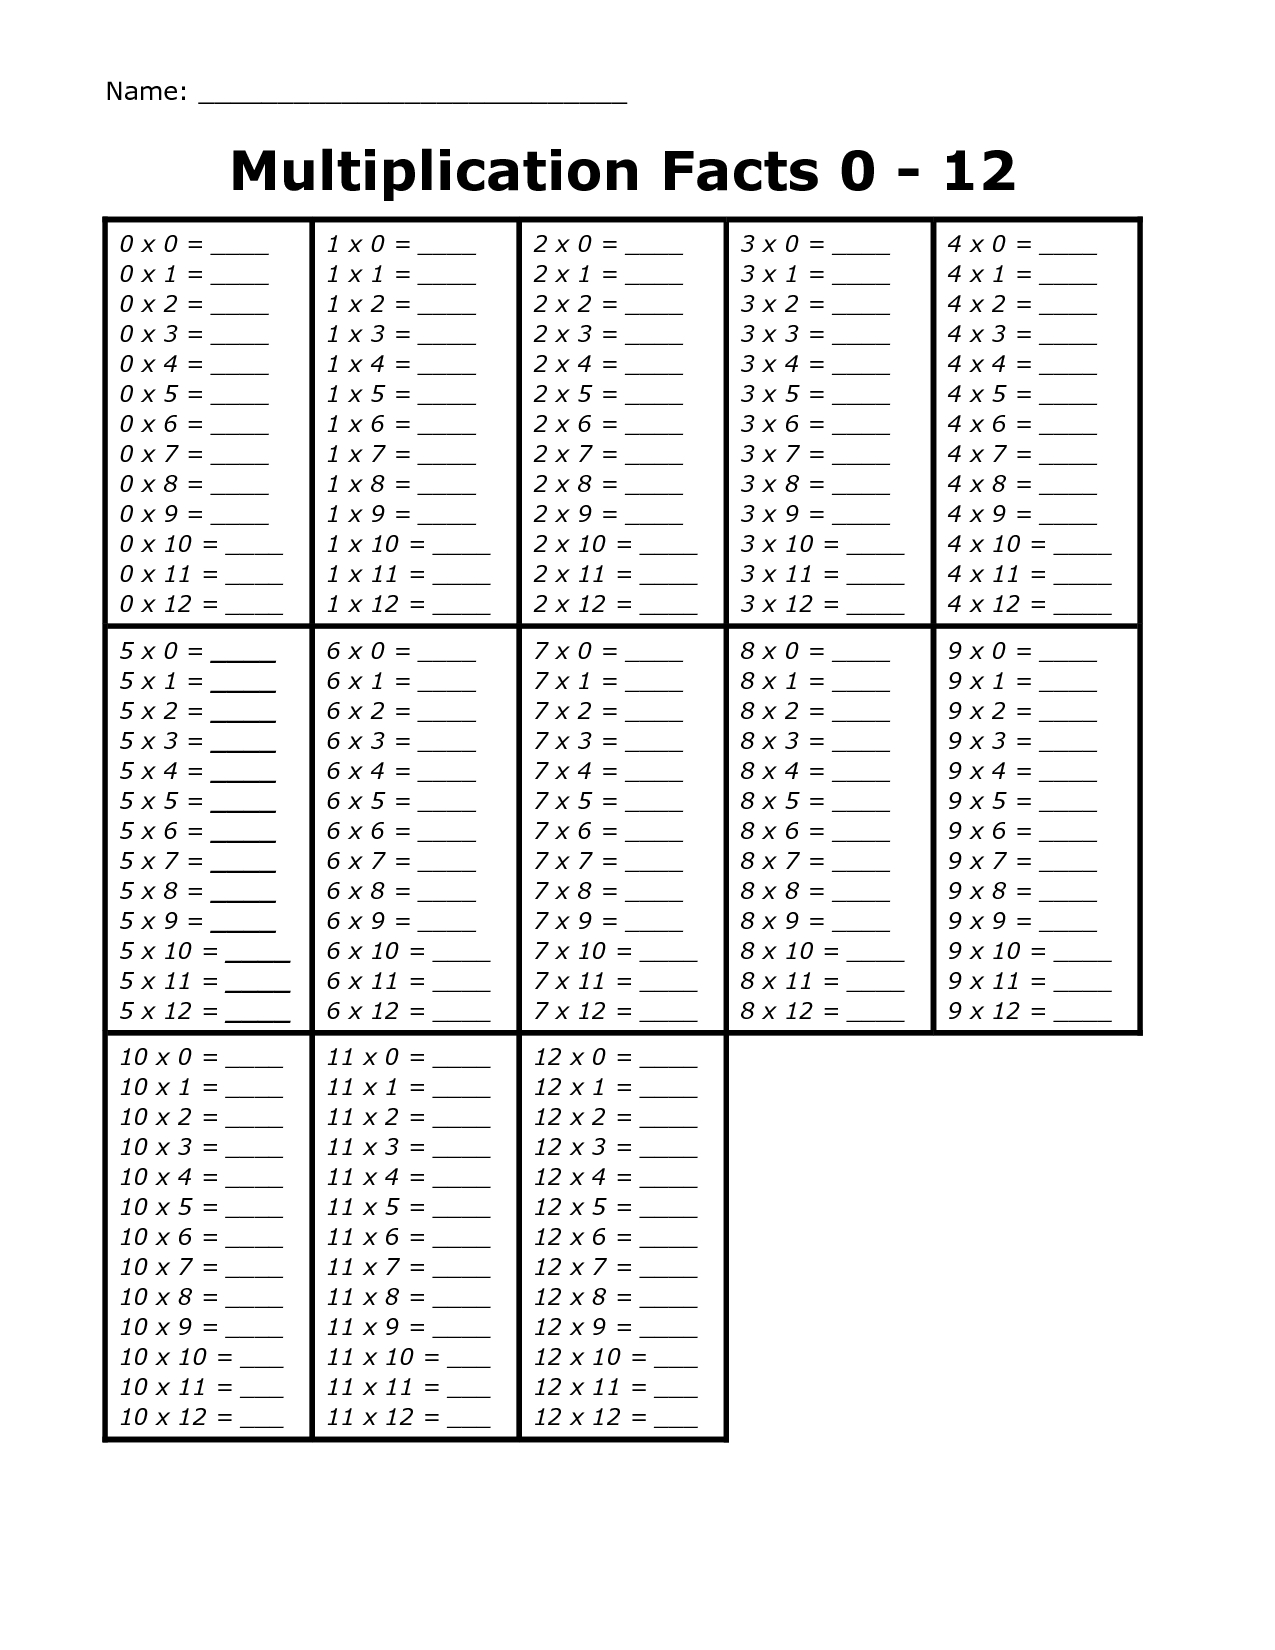 printable-multiplication-table-0-12-printablemultiplication